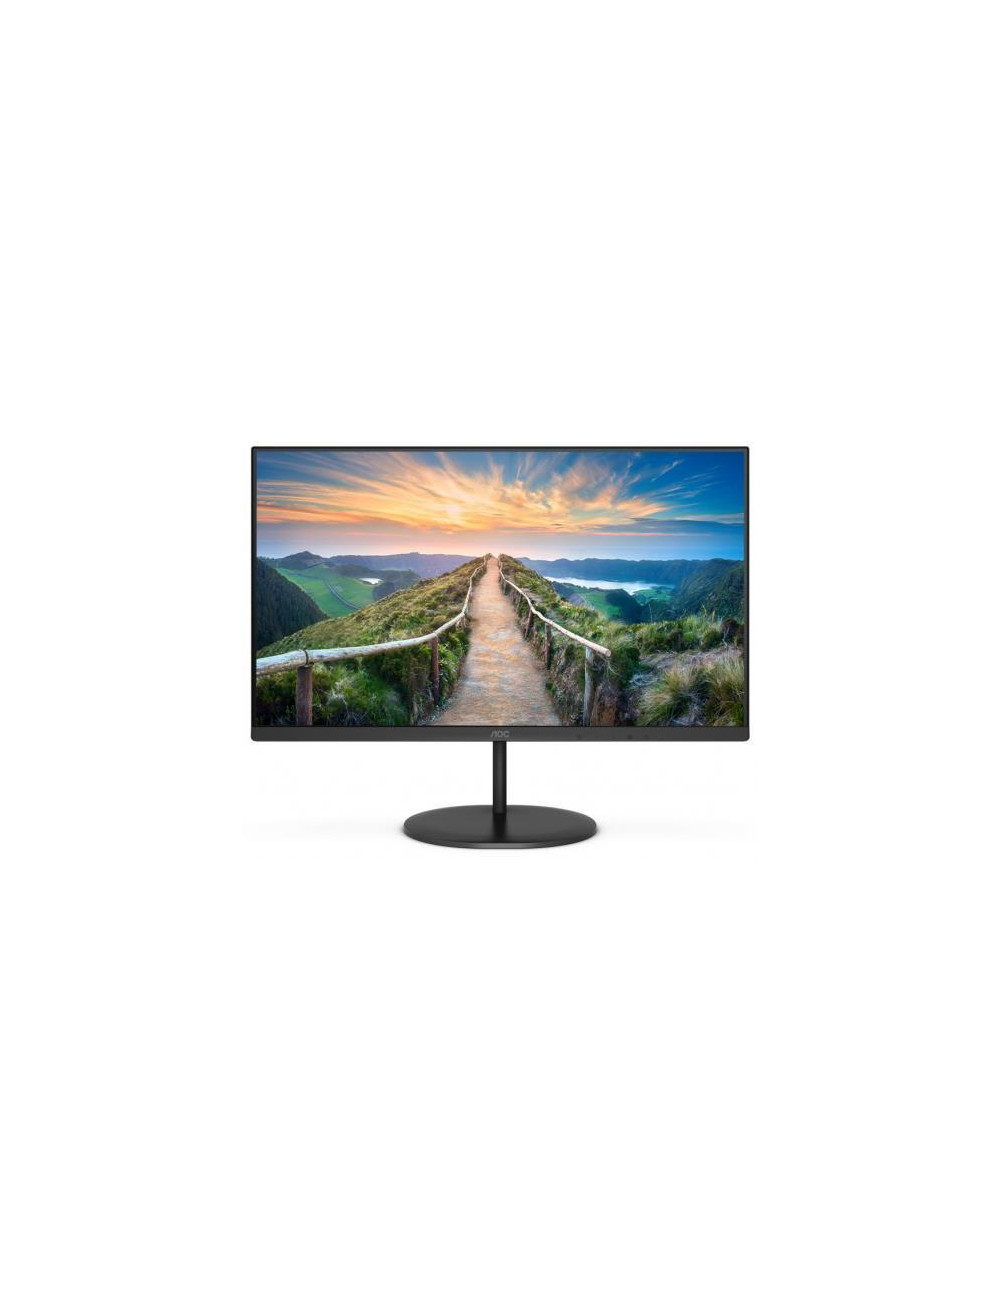 LCD Monitor|AOC|U27V4EA|27"|Panel IPS|3840x2160|16:9|60Hz|4 ms|Speakers|Tilt|Colour Black|U27V4EA